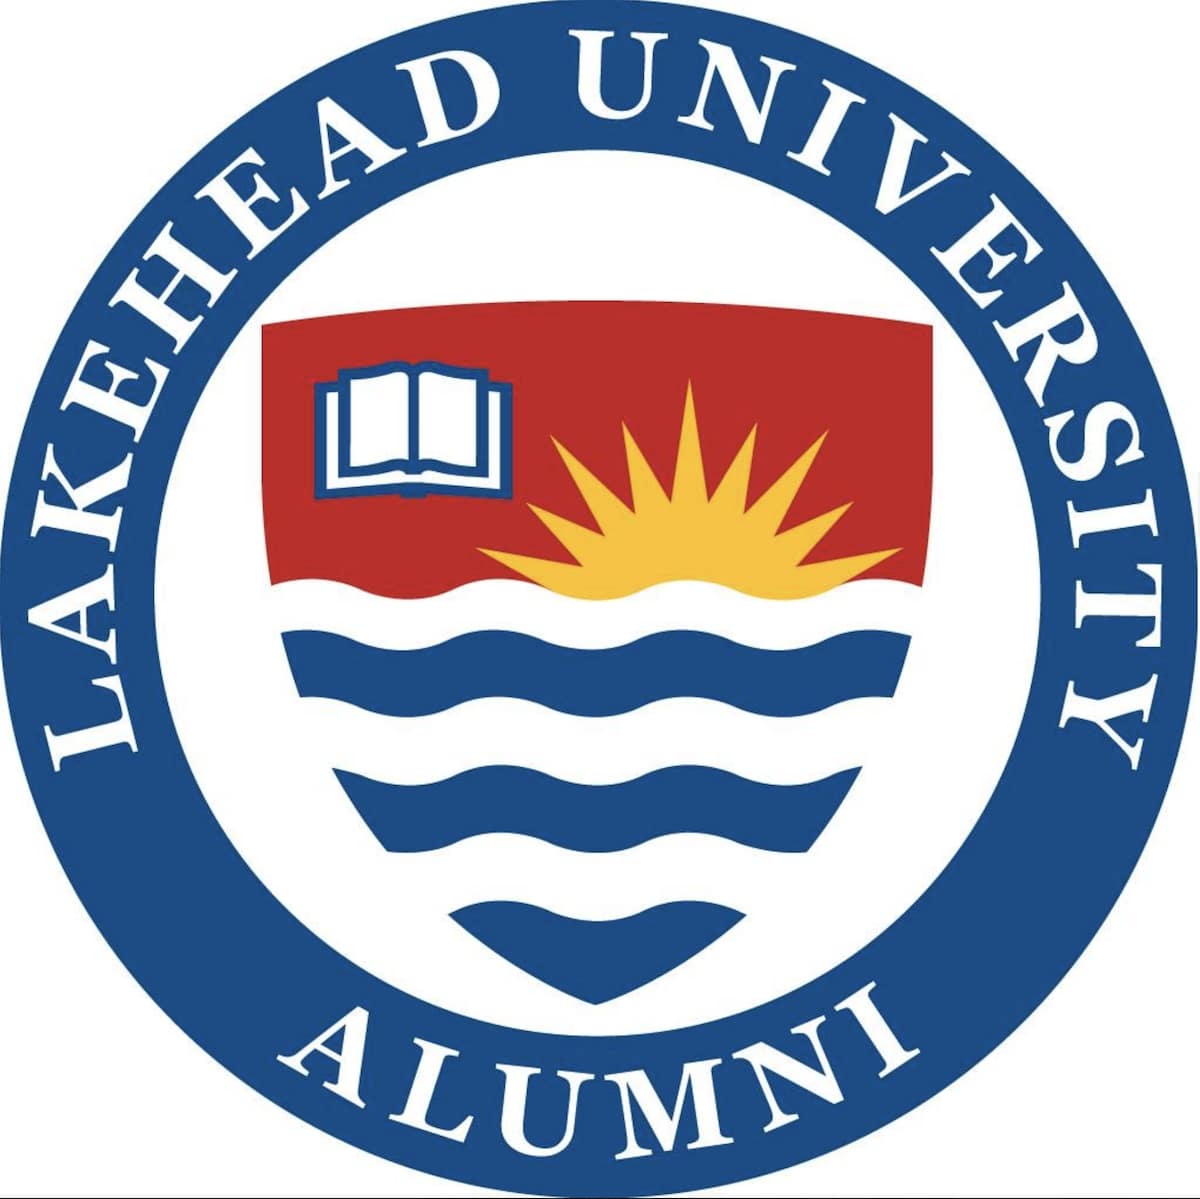 The Lakehead University Alumni Logo